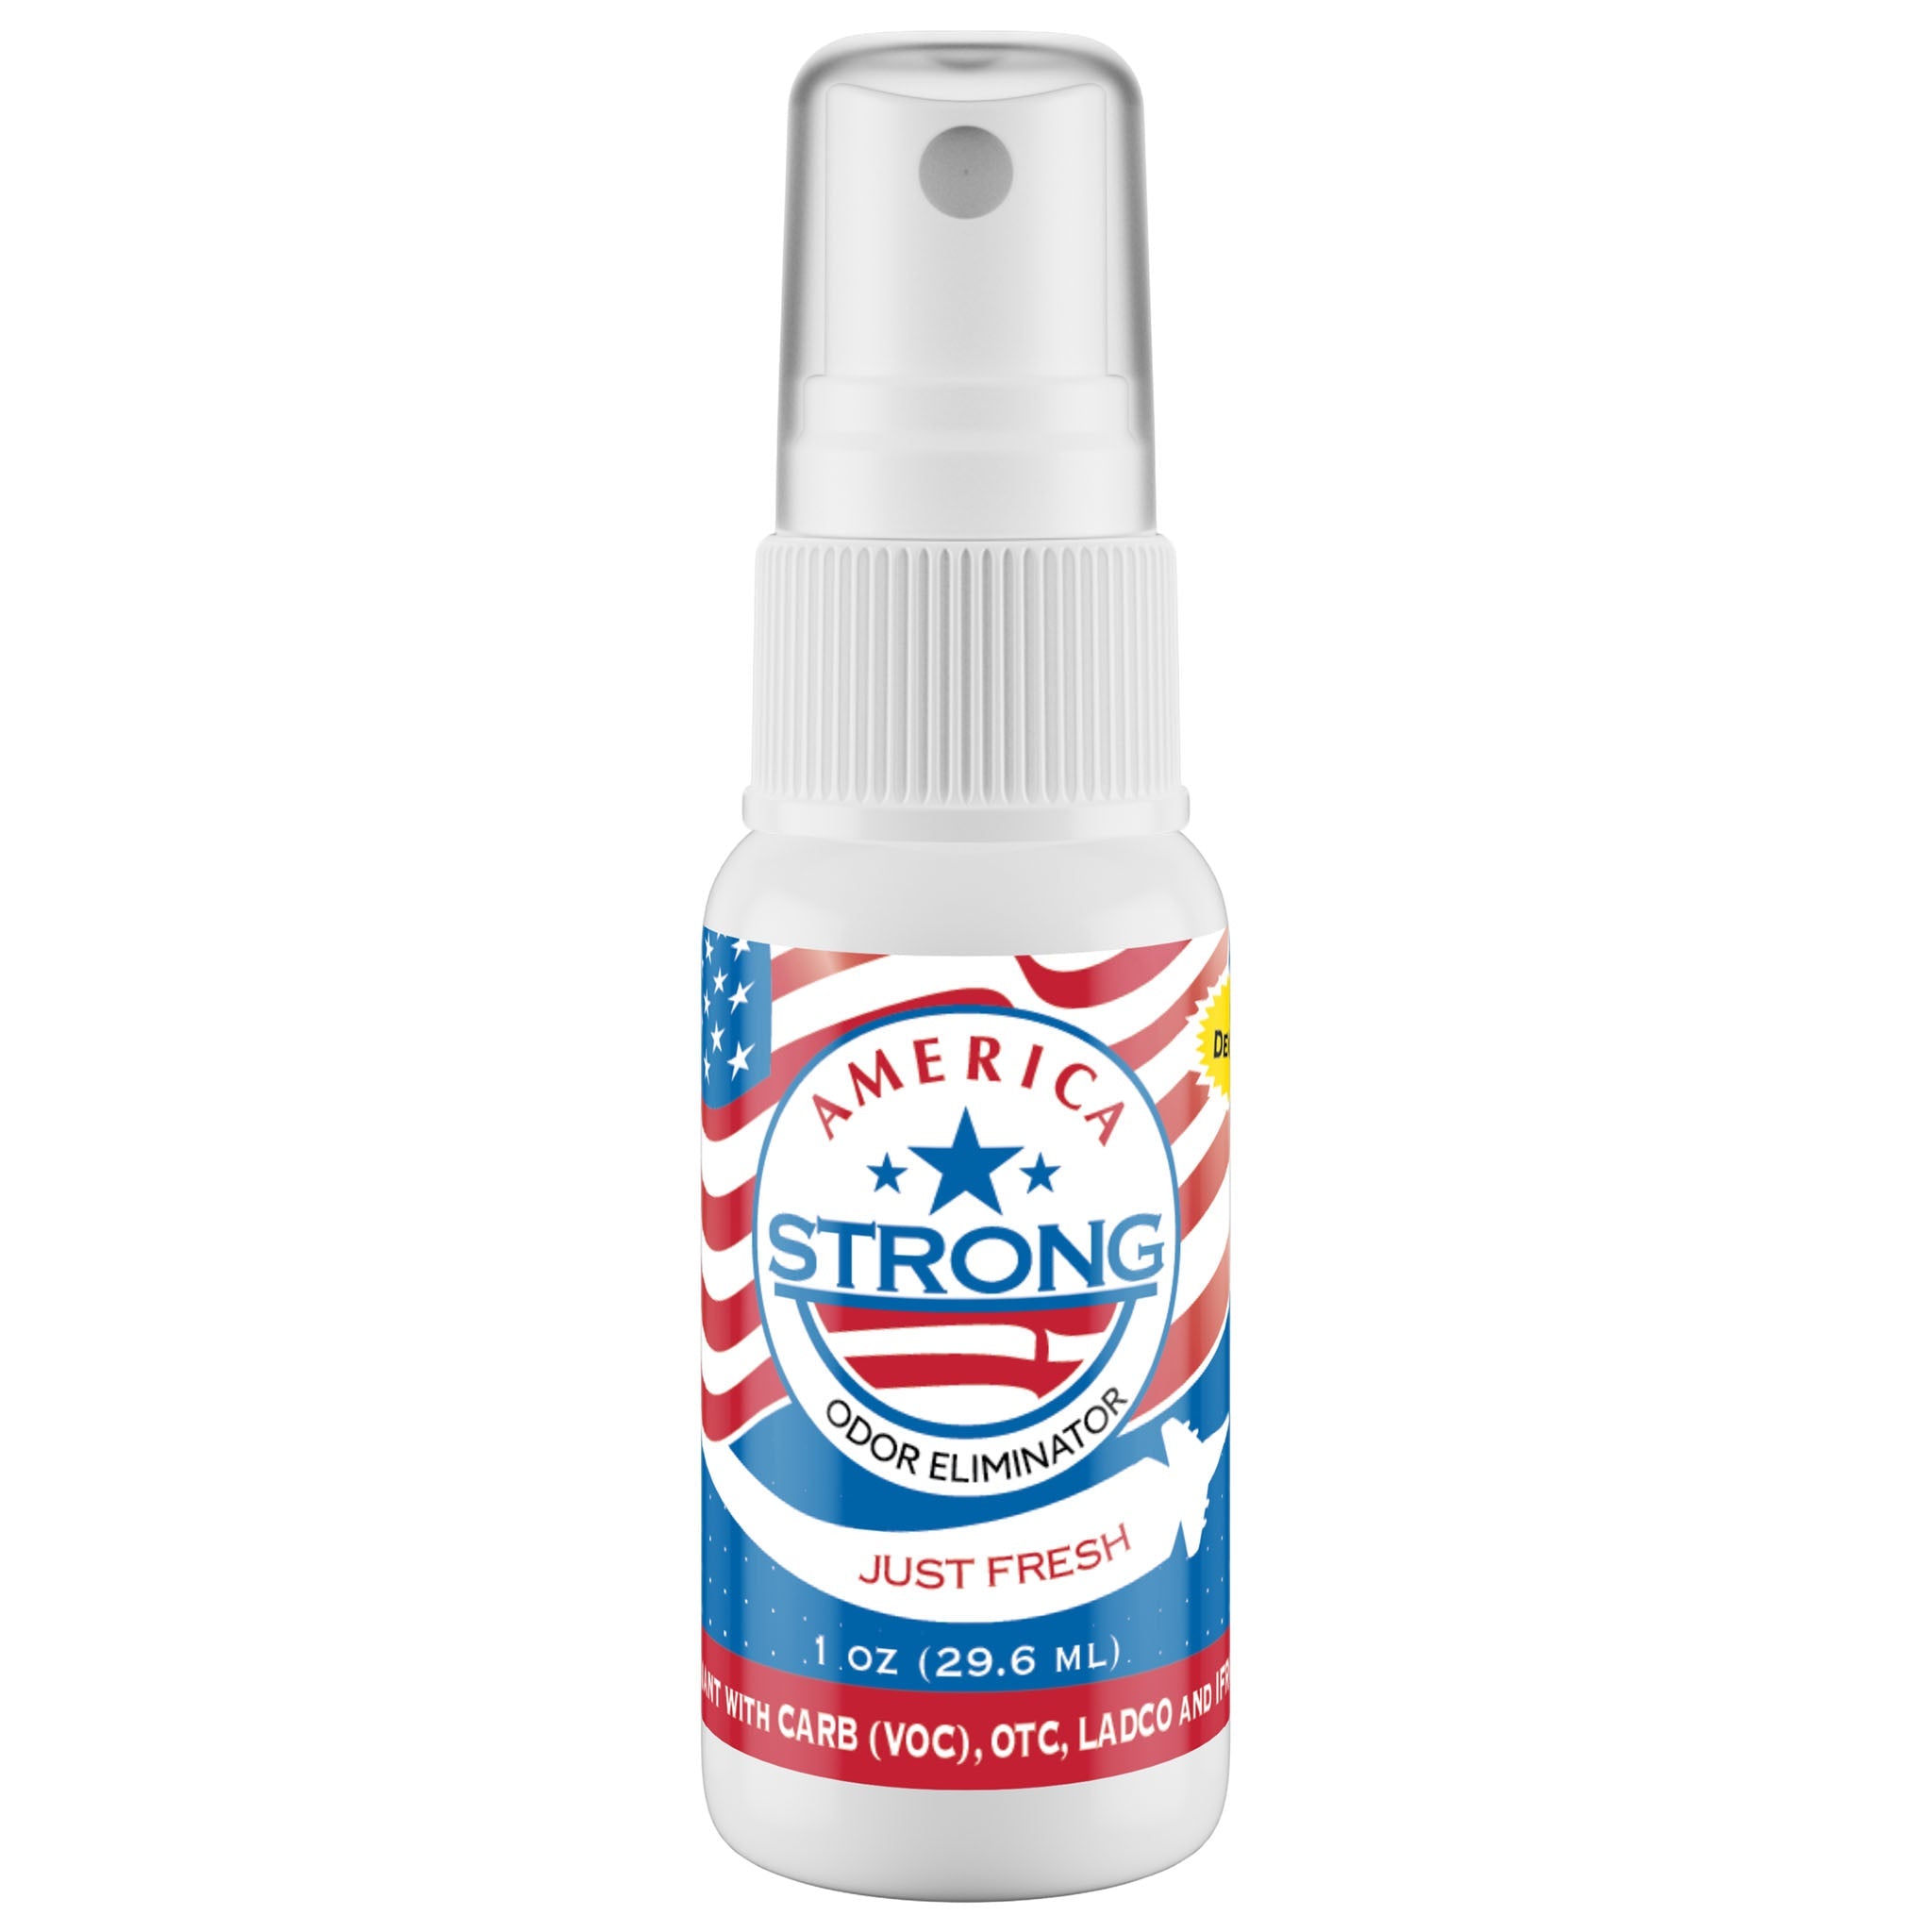 America Strong Odor Eliminator - Just Fresh Scent